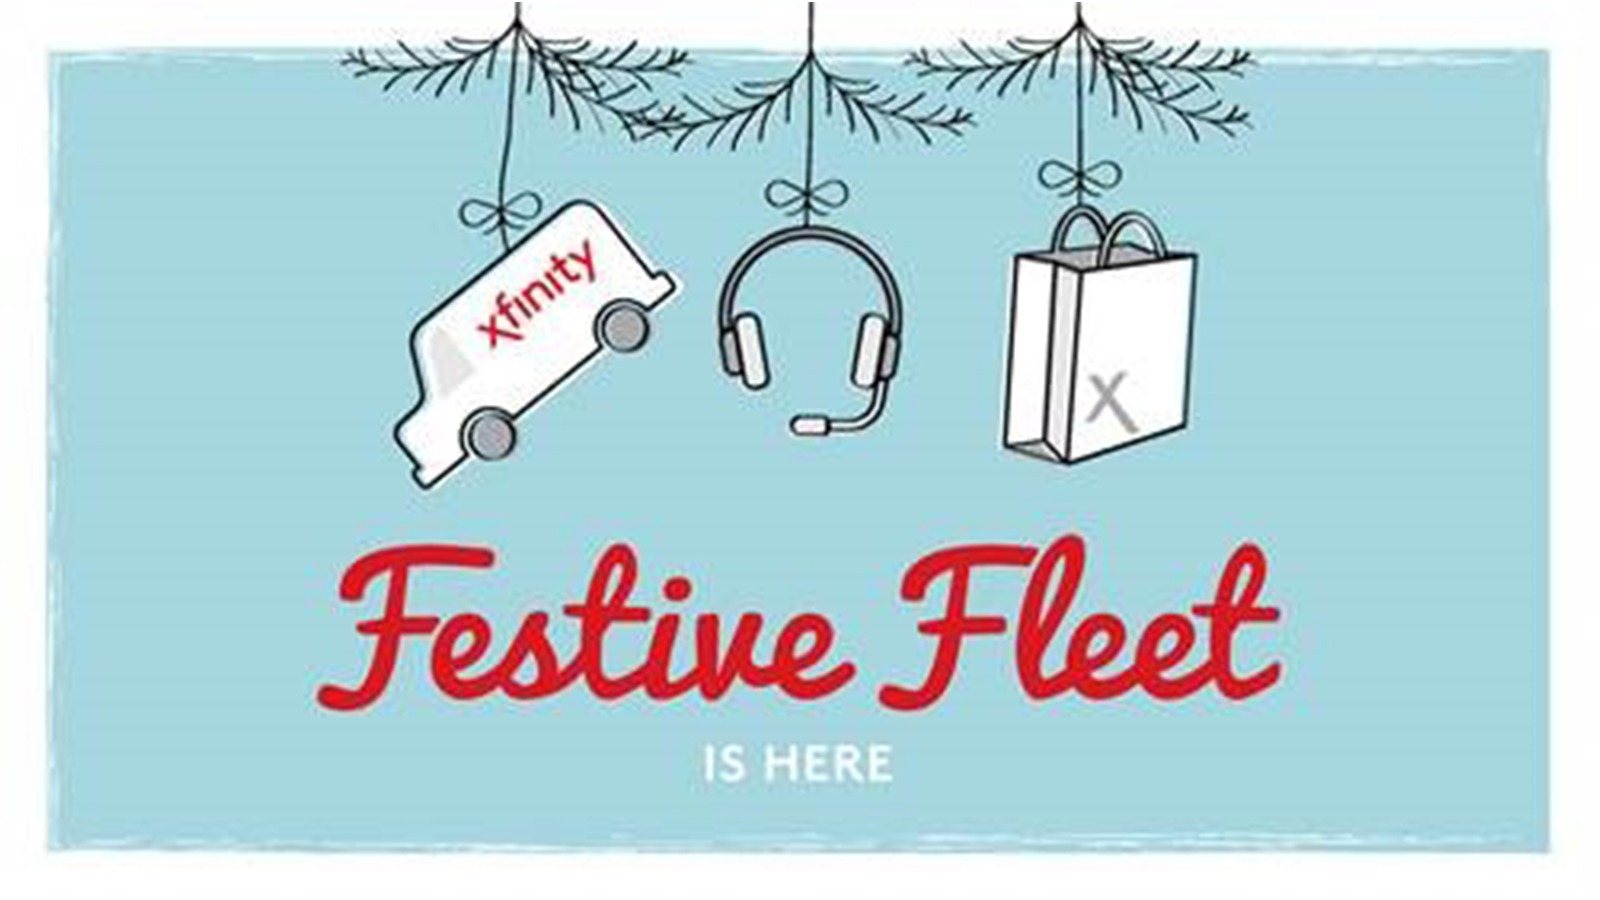 The Festive Fleet logo.